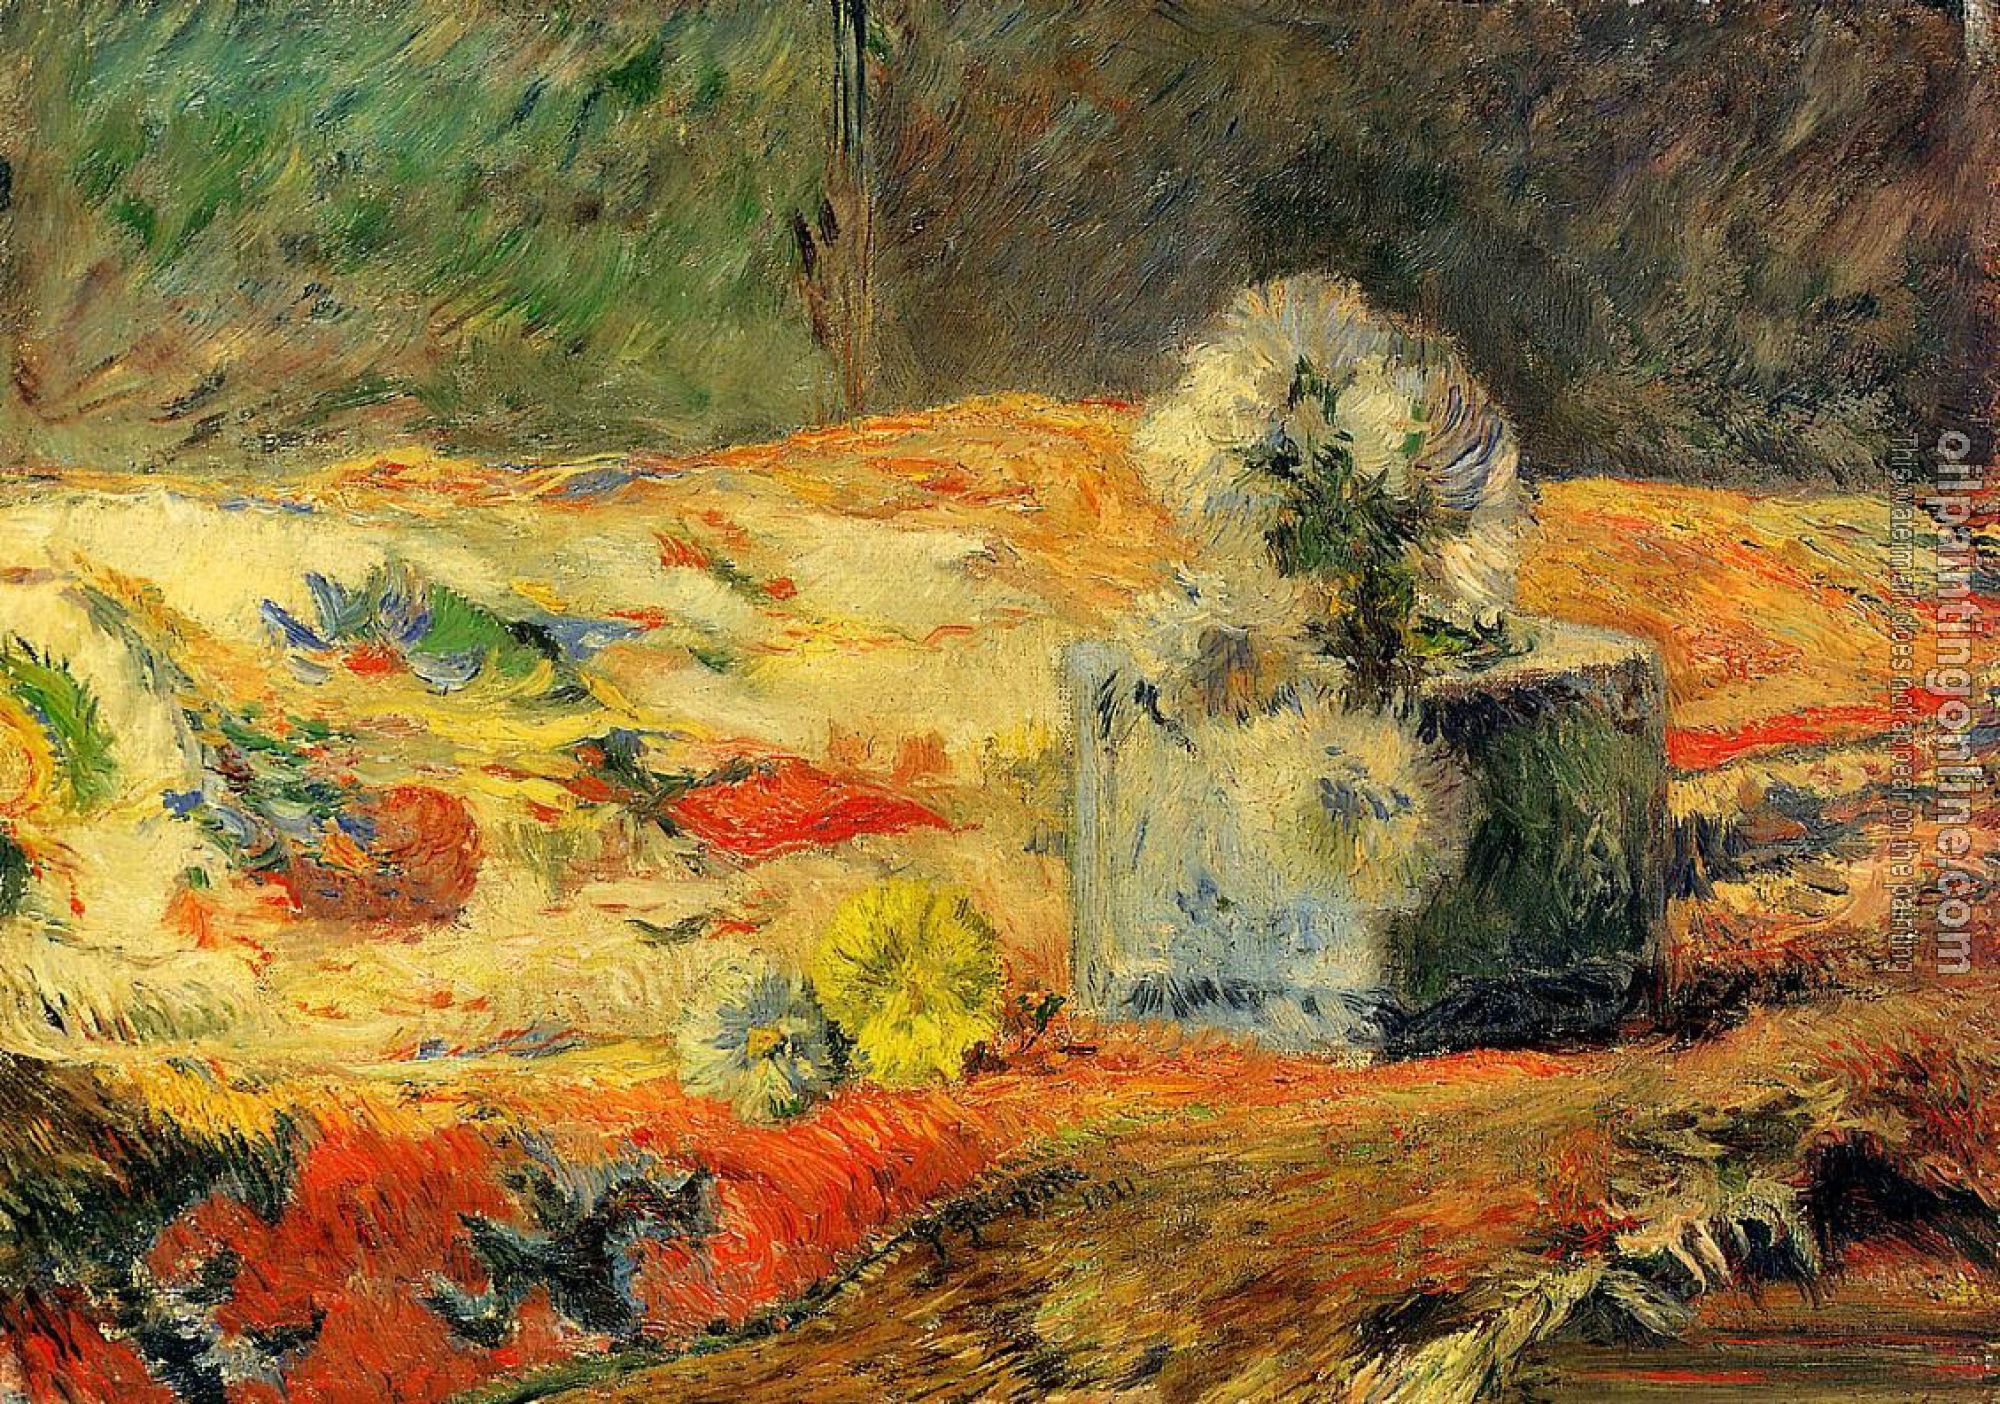 Gauguin, Paul - Flowers and Carpet